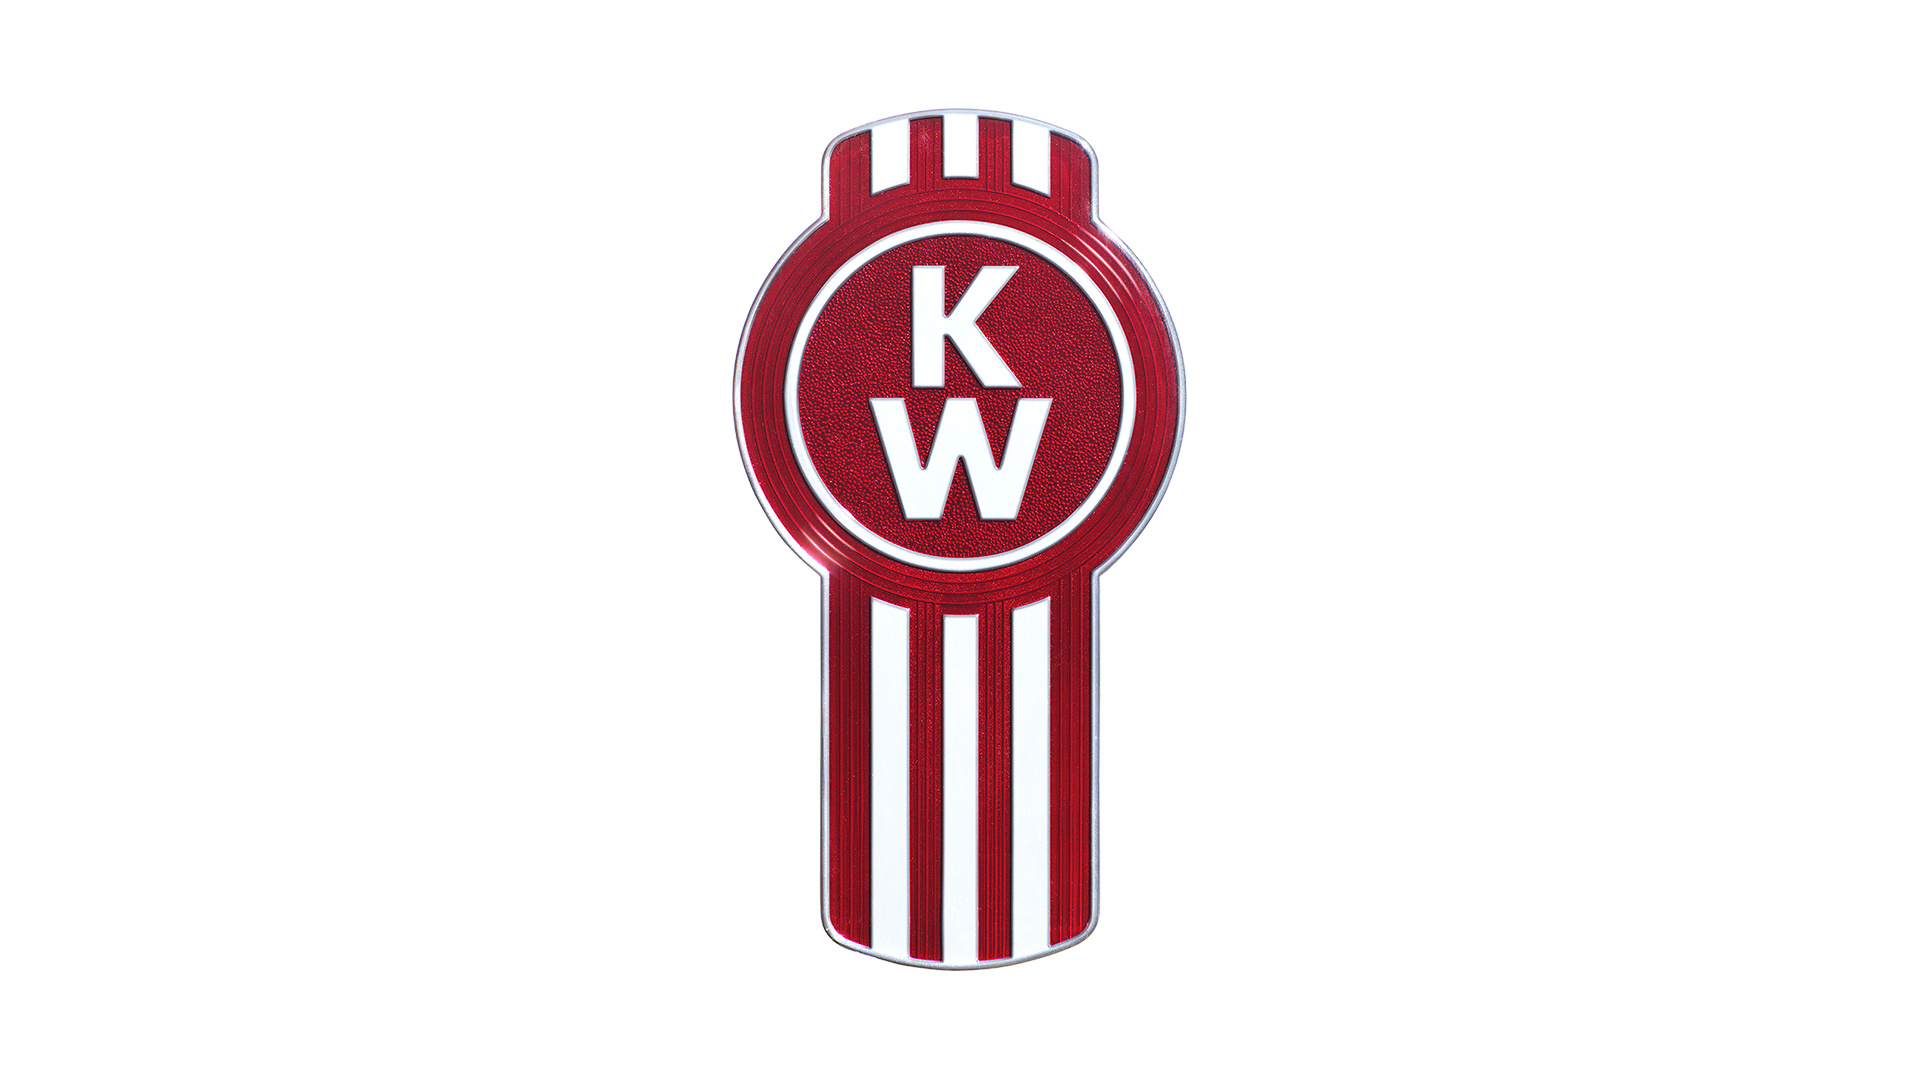 Kenworth truck logo, HD PNG, Brand identification, Automotive symbol, 1920x1080 Full HD Desktop